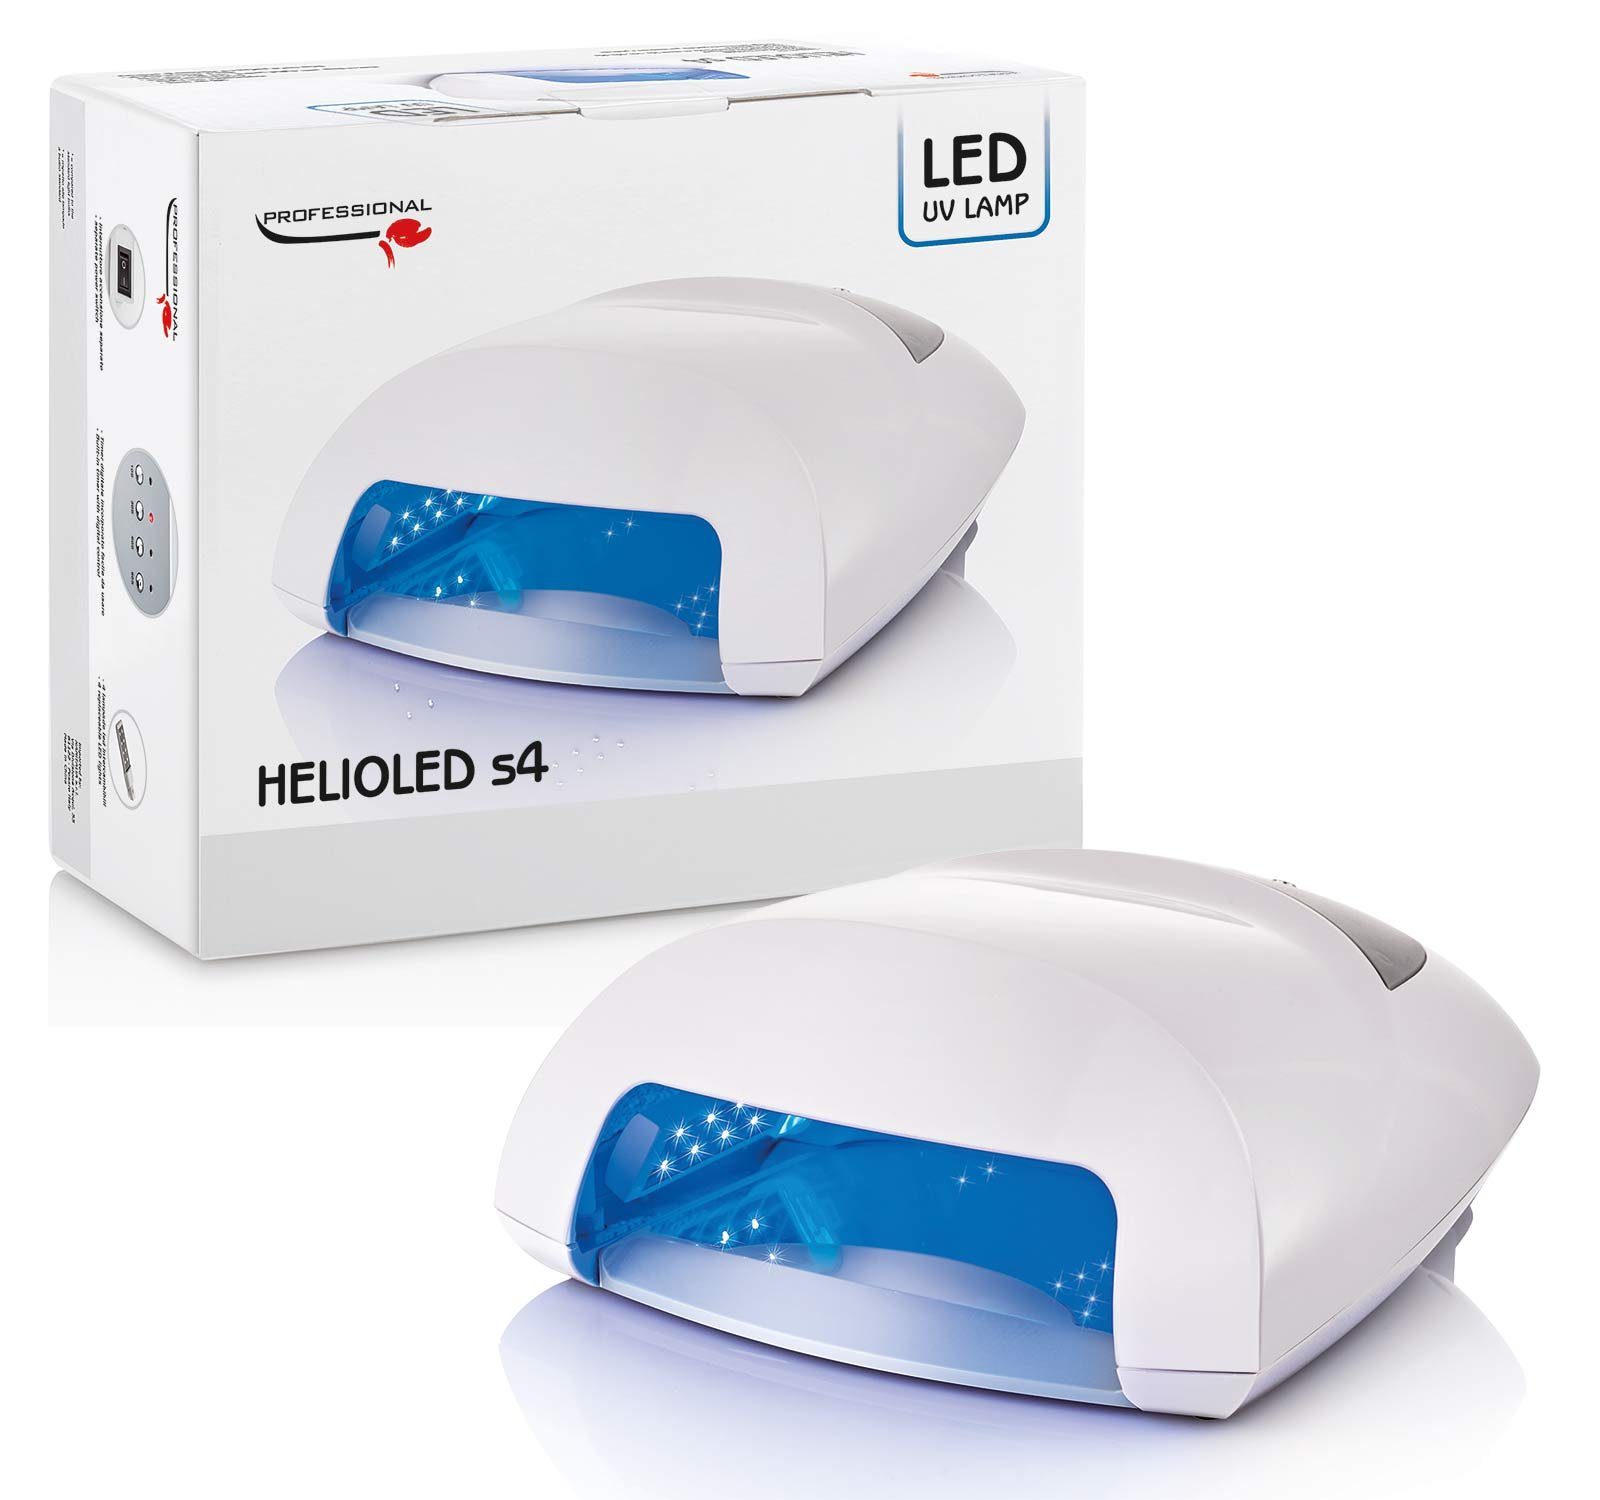 Koskaderm UV-Reflektorlampe HELIOLED S4 ist eine Professionelle UV-LED Lampe-Farbe weiß